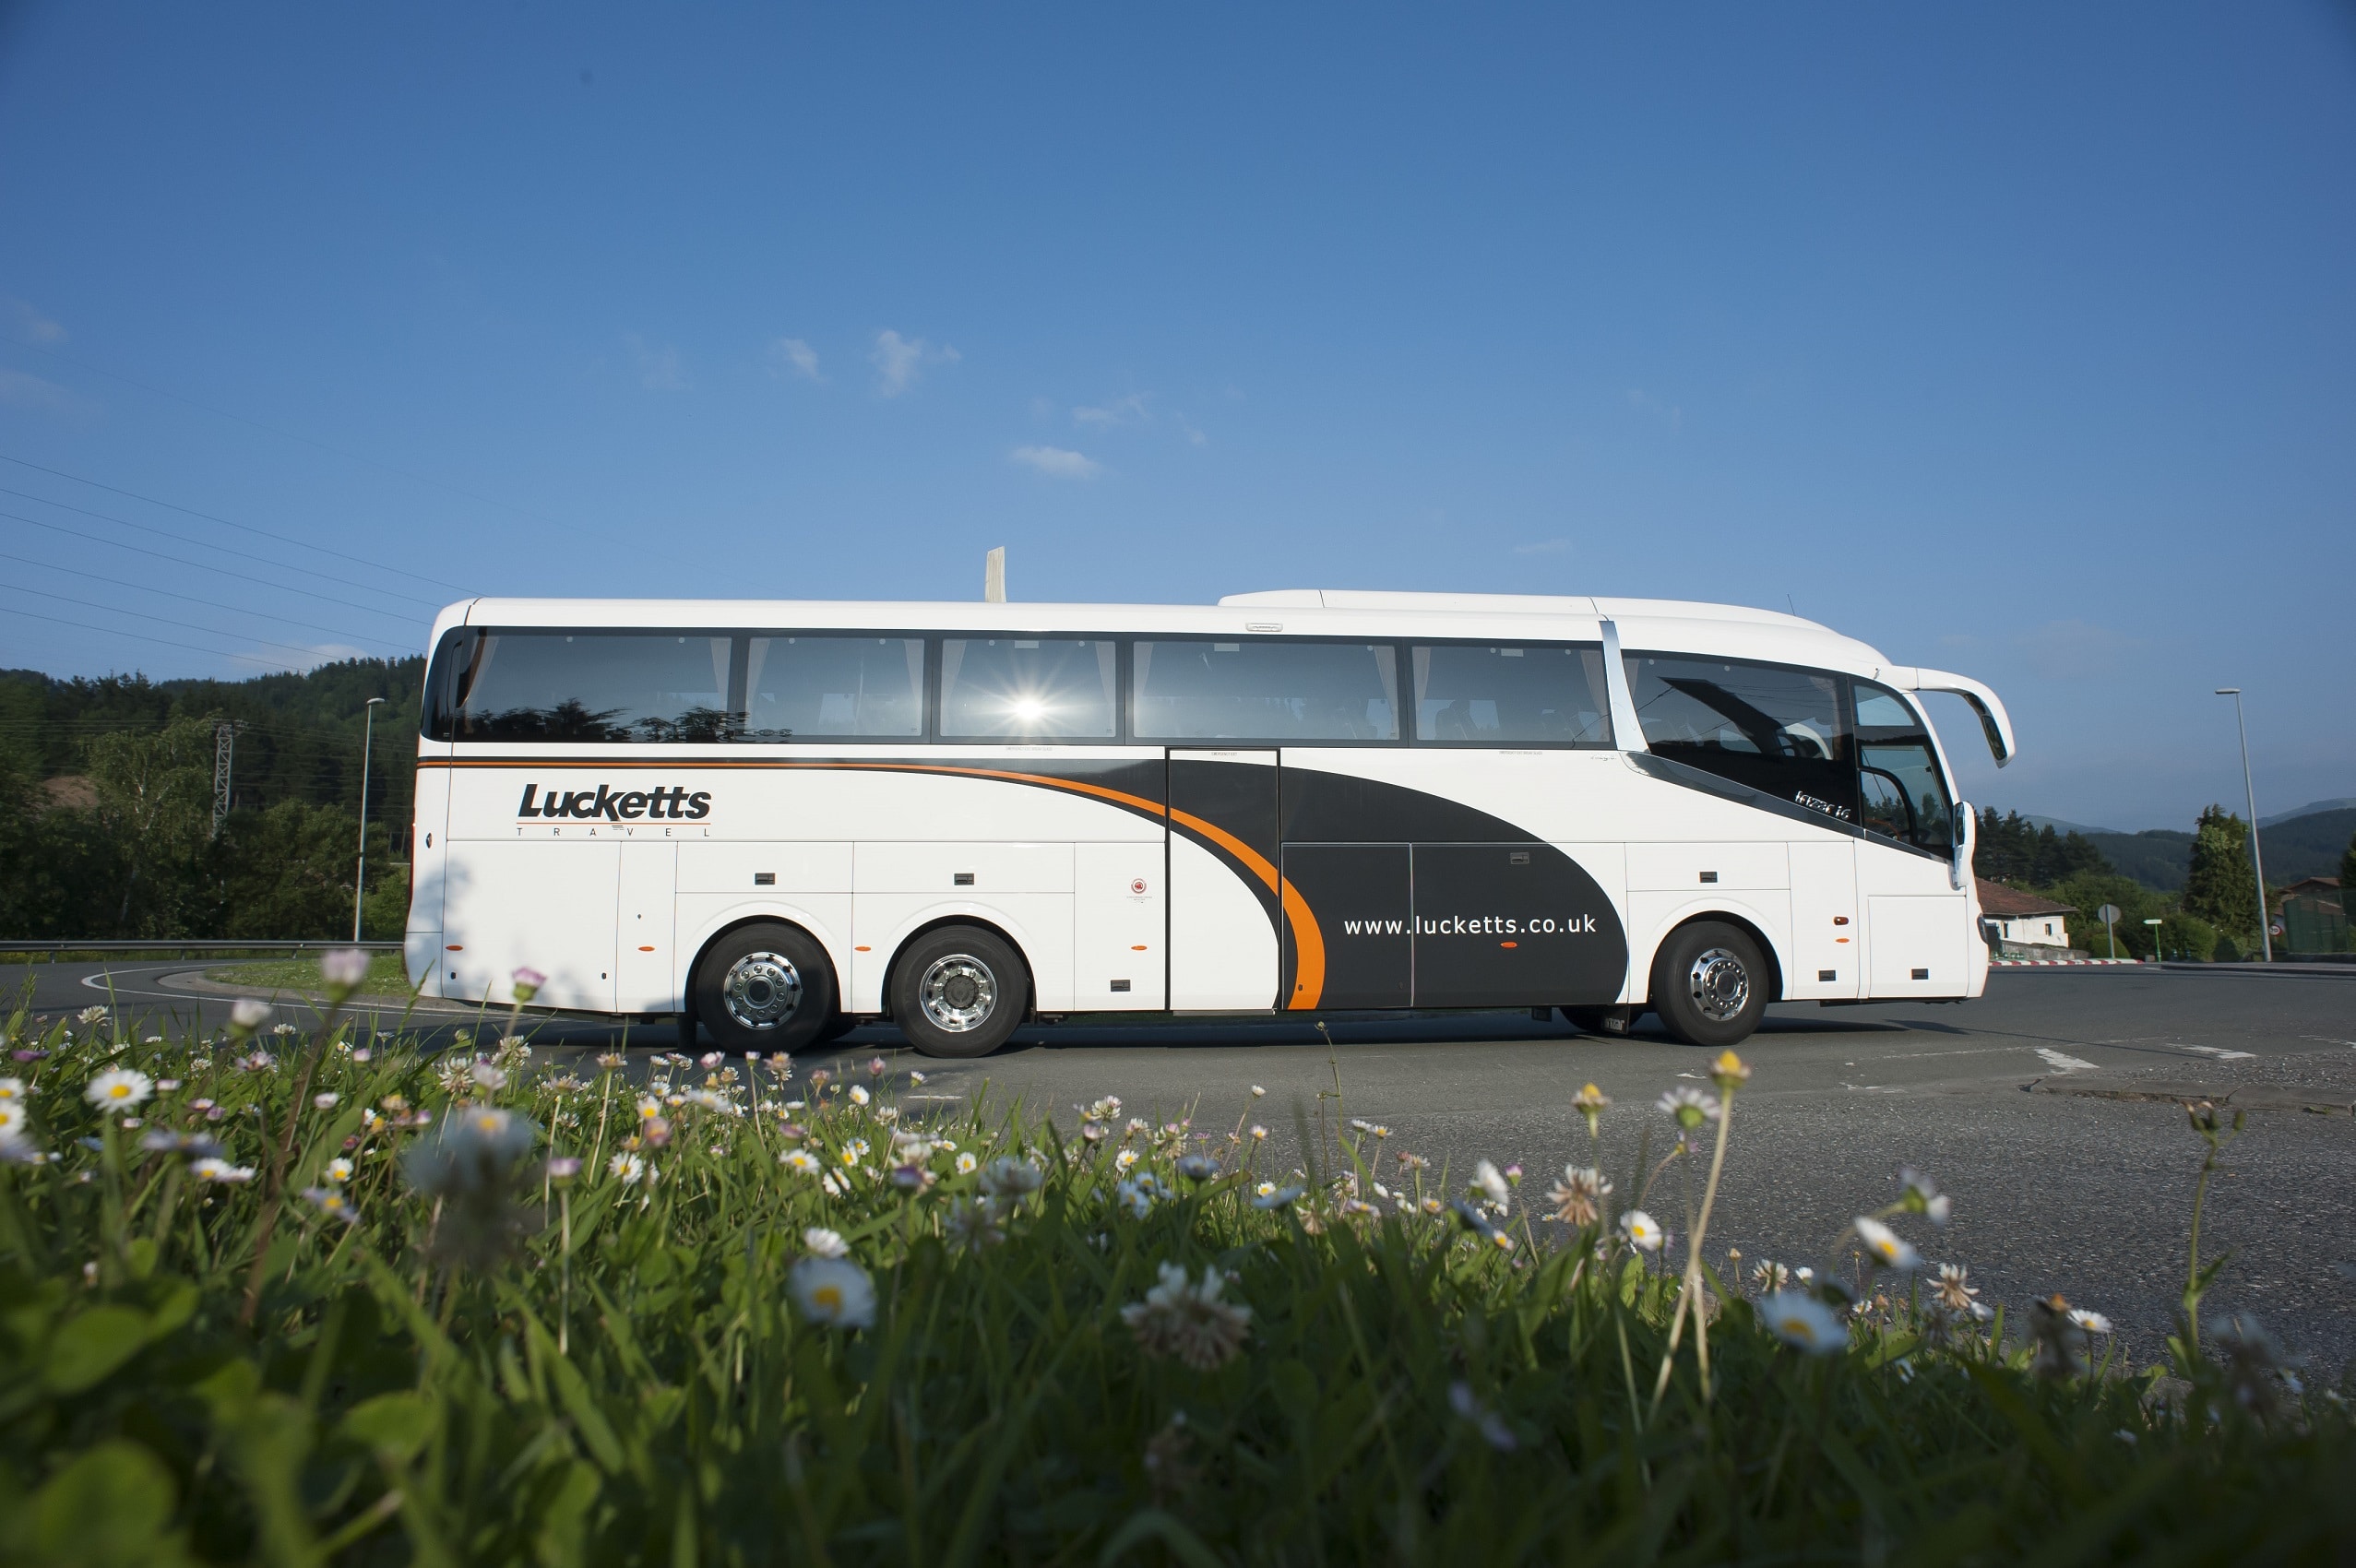 National Express coach holidays bookings increase